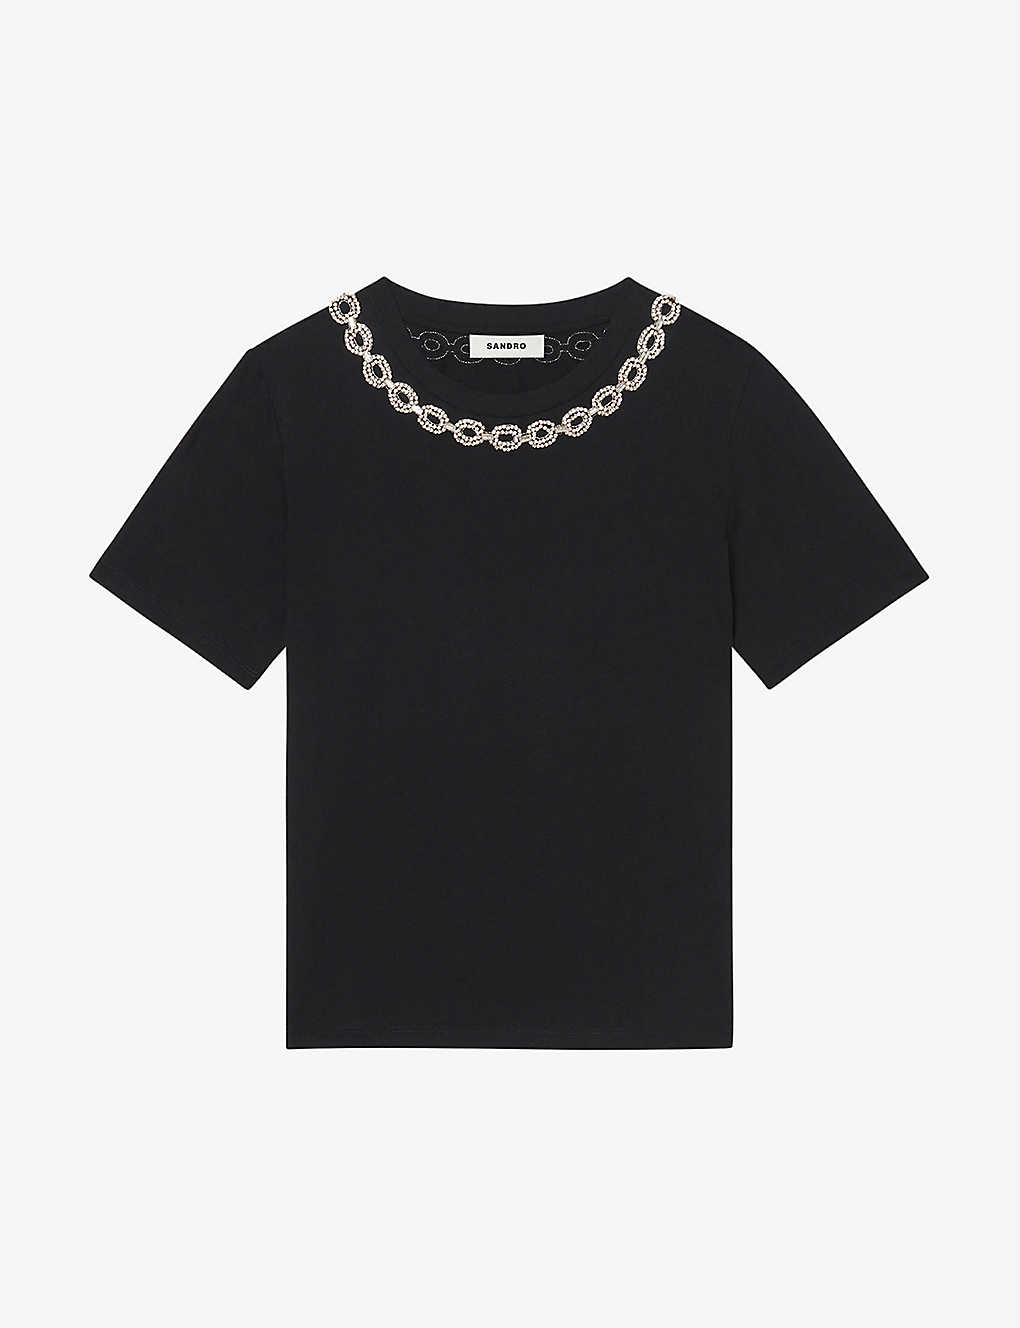 Shop Sandro Women's Noir / Gris Embroidered Rhinestone-embellished Cotton-jersey T-shirt